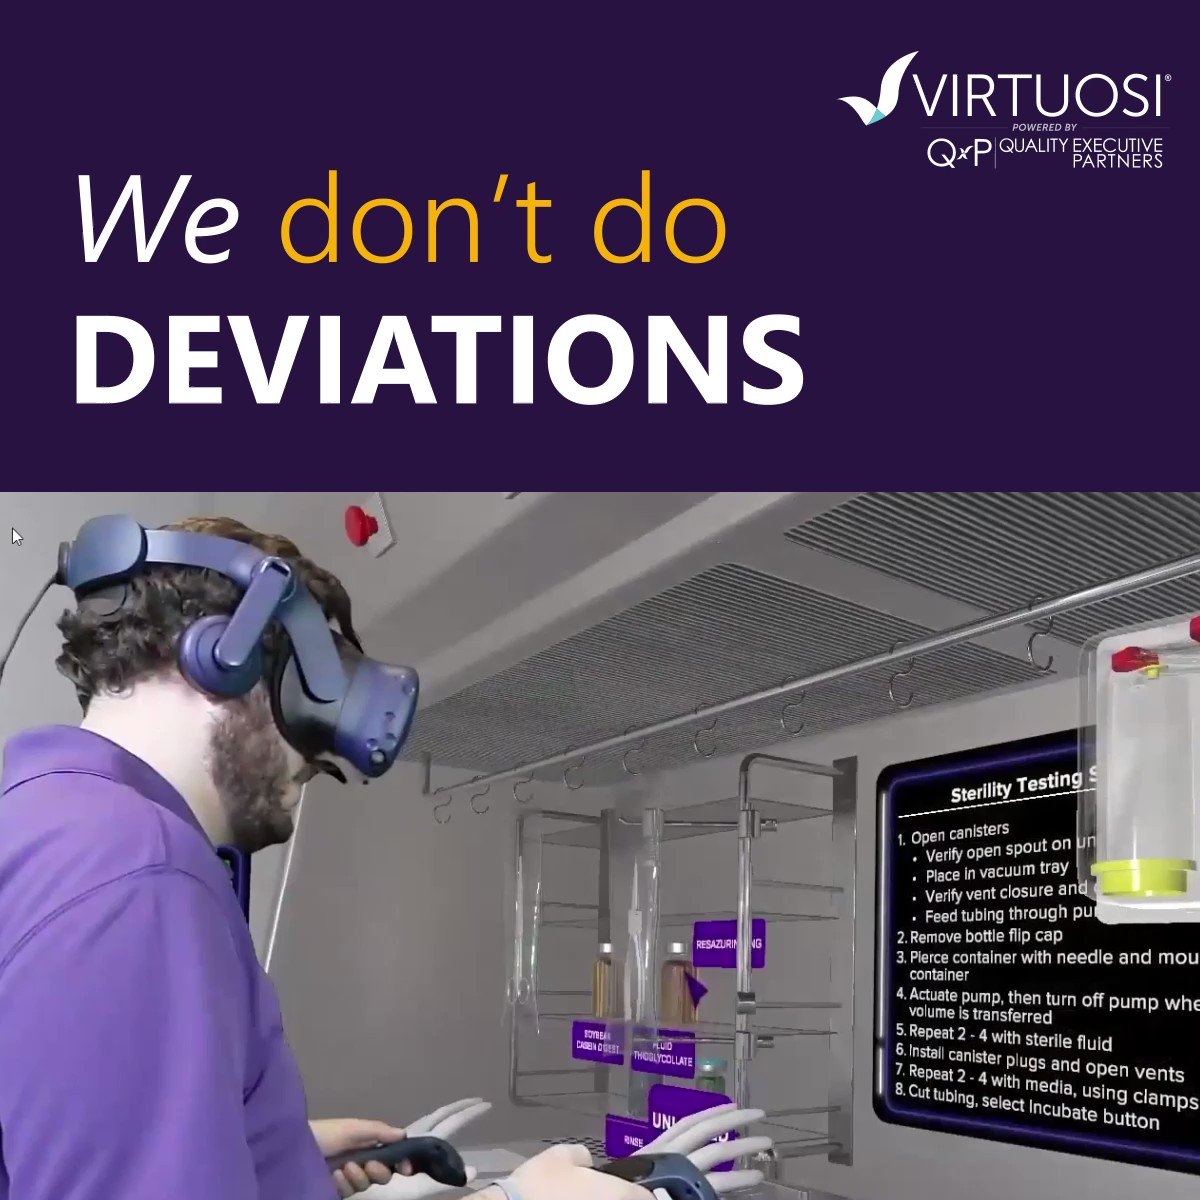 Virtuosi VR powered by QxP